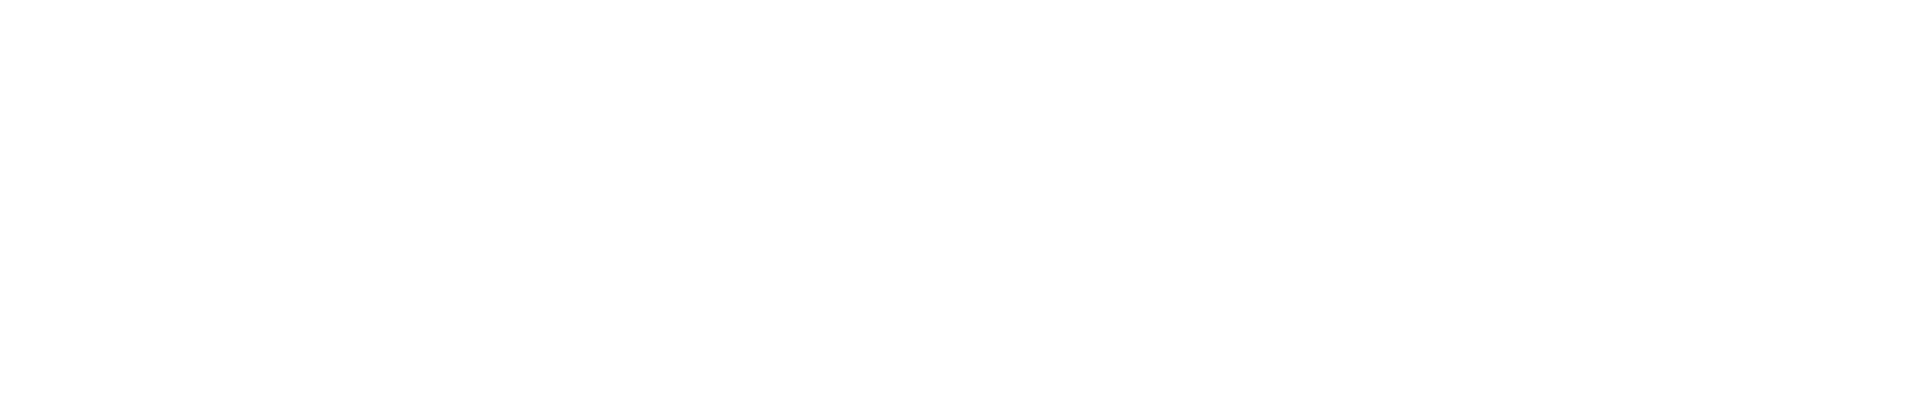 White renderman logo. Renderman is written in thick white lettering